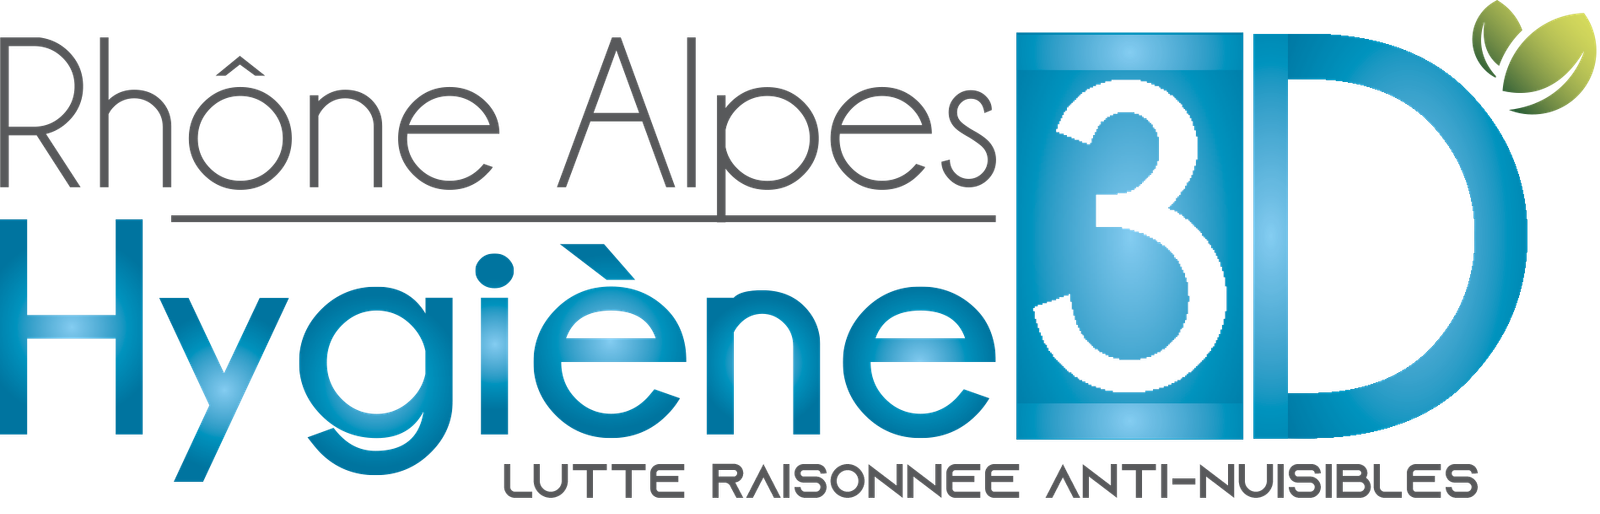 Logo Rhône-Alpes hygiène 3D,